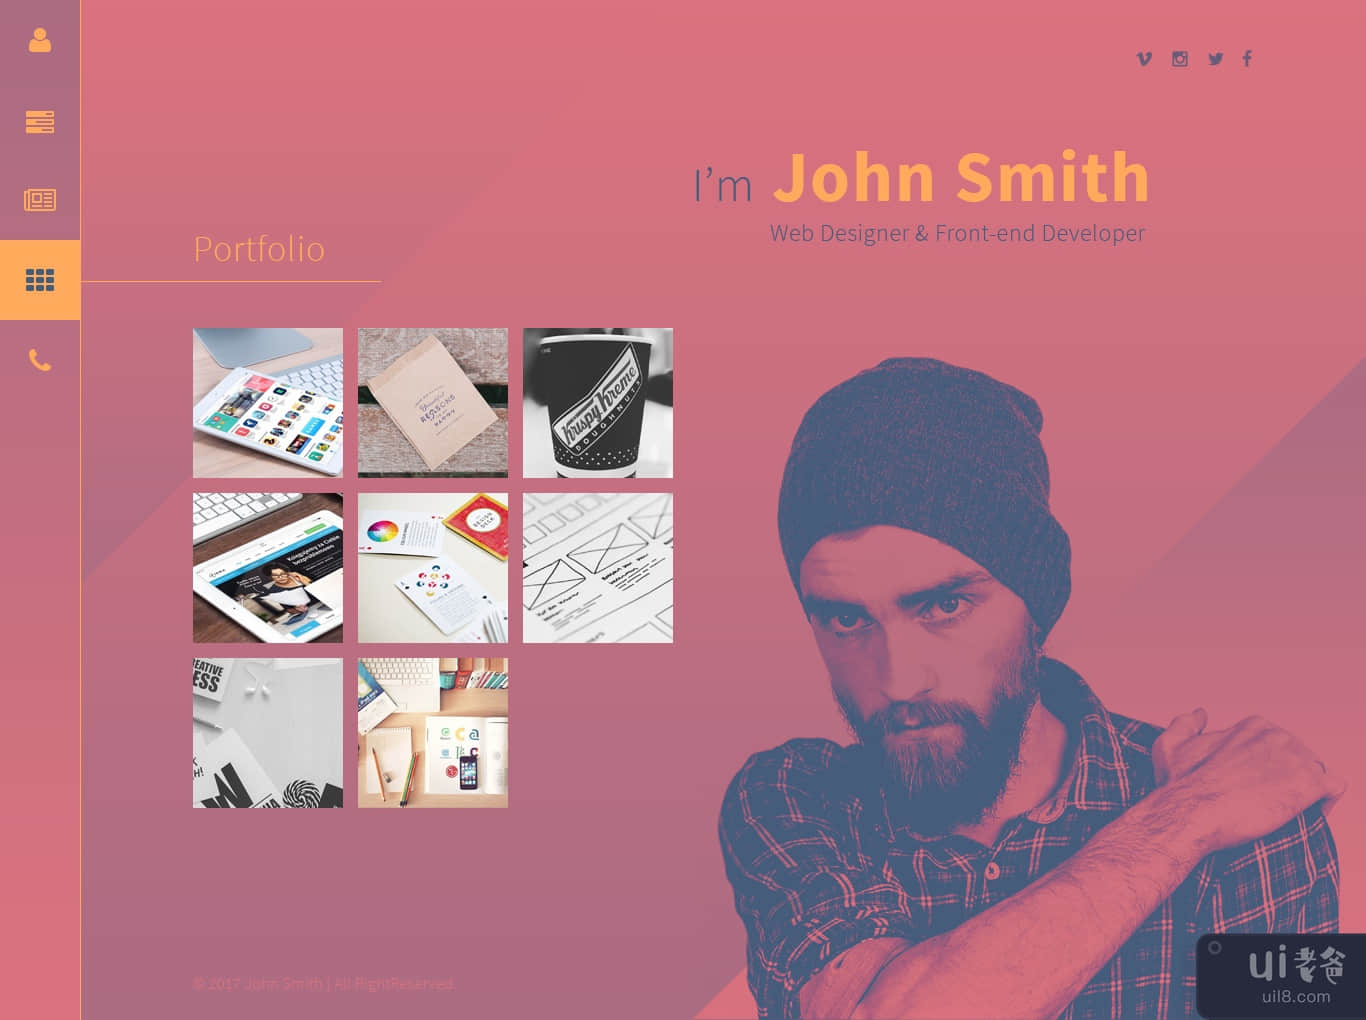 JohnSmith - 设计师作品集网站(JohnSmith - Designer’s Portfolio Website)插图2